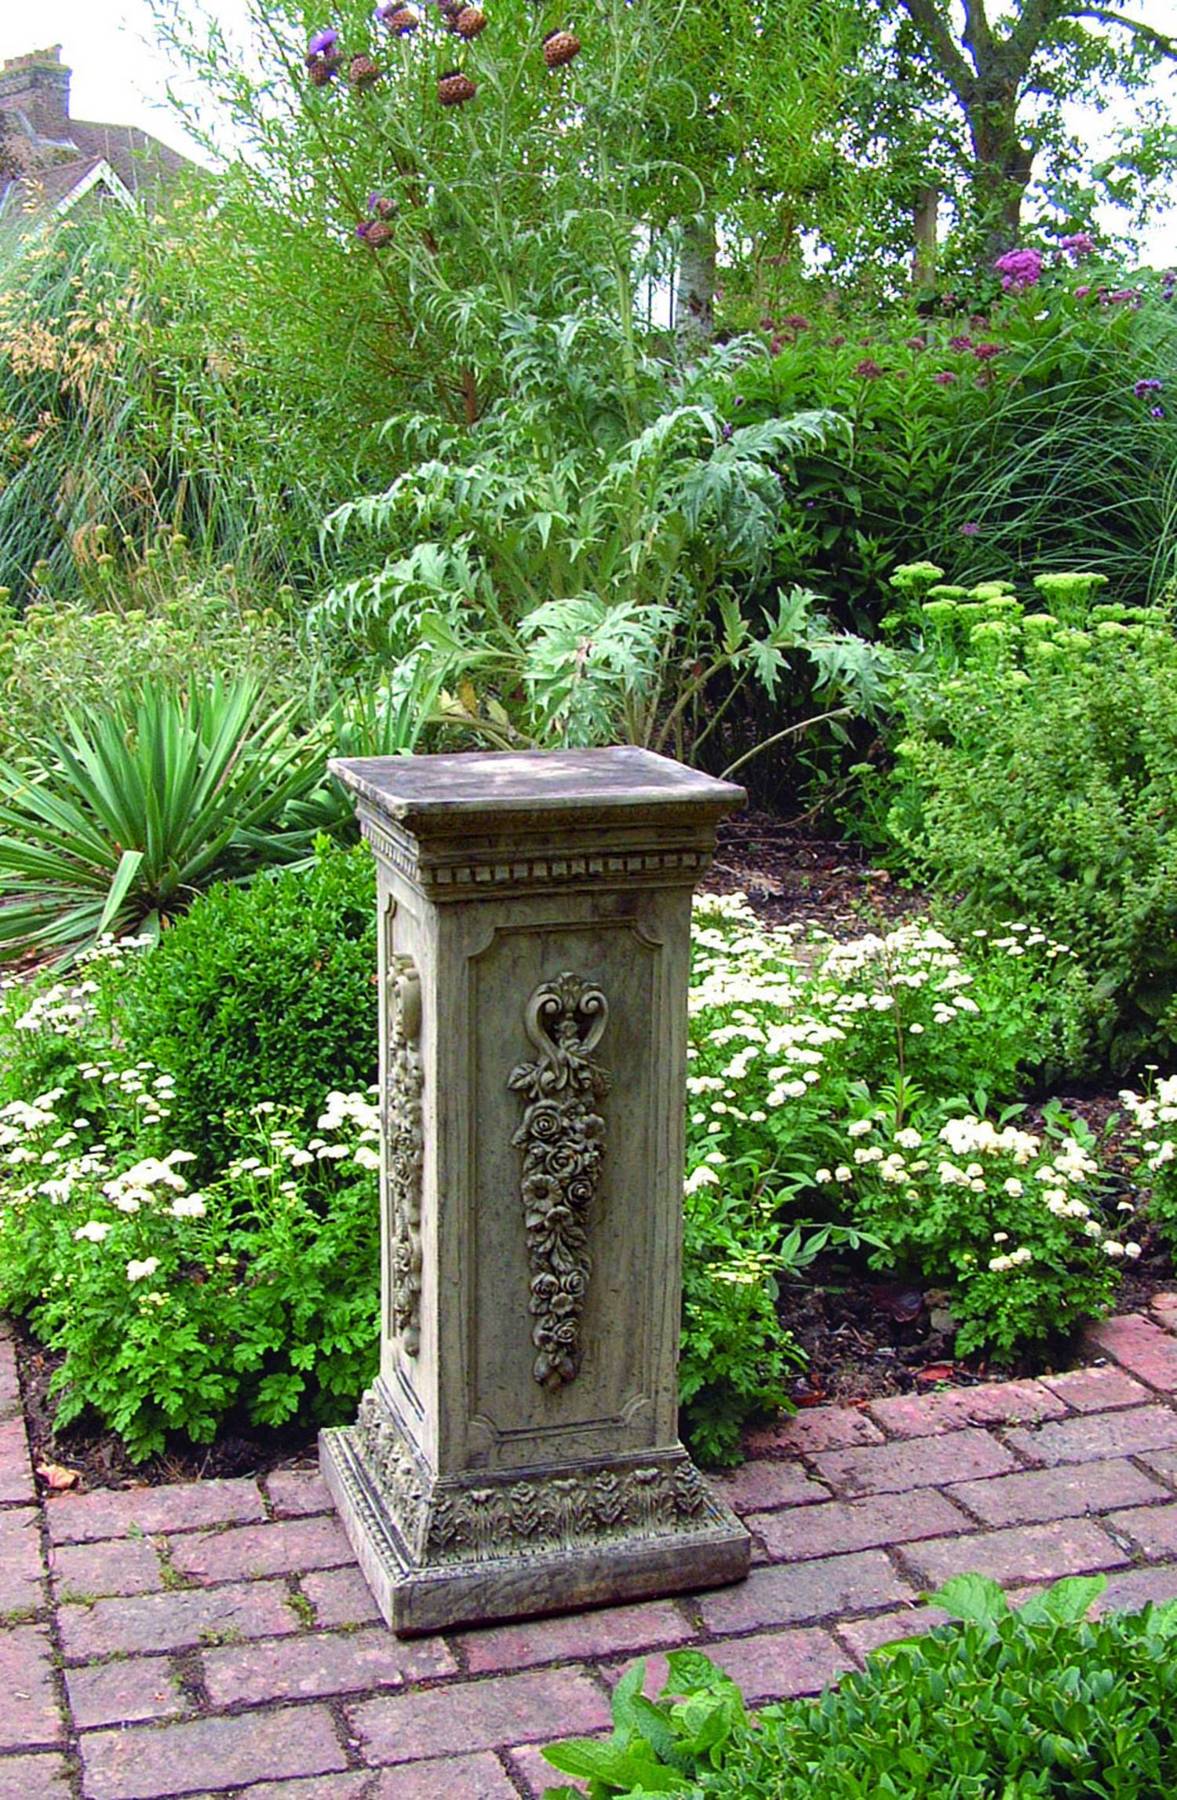 Floral Stone Garden Pedestal